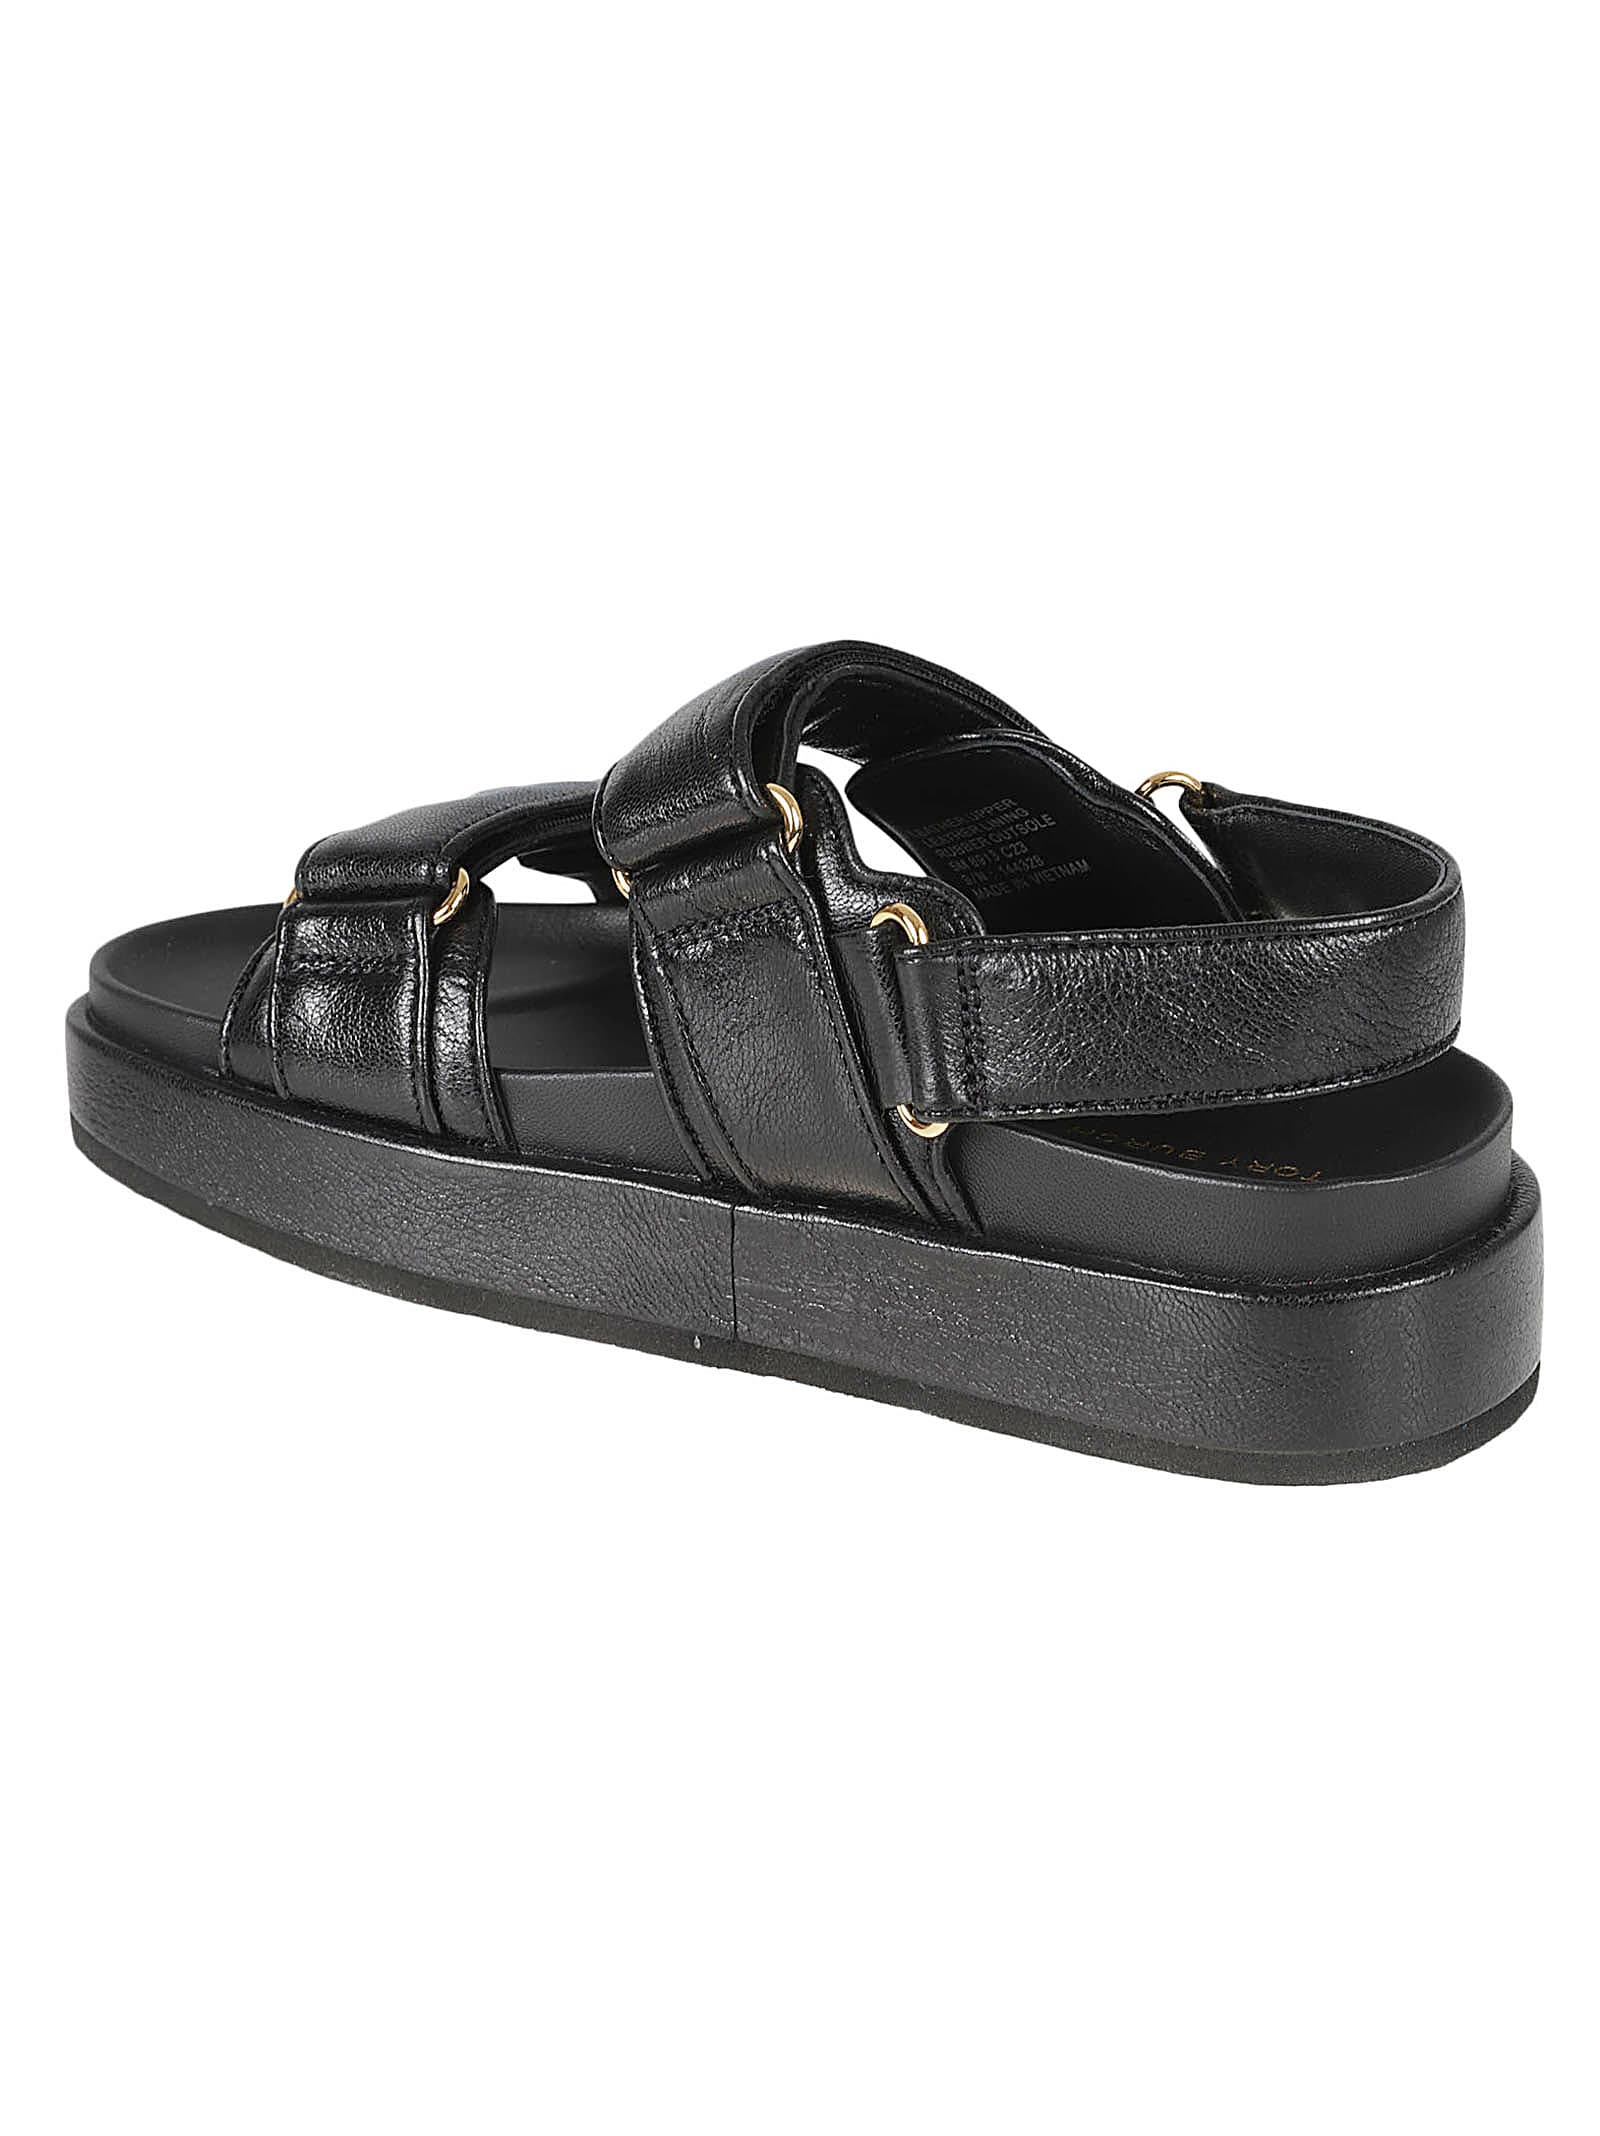 Tory Burch Kira Sport Leather Sandals in Black